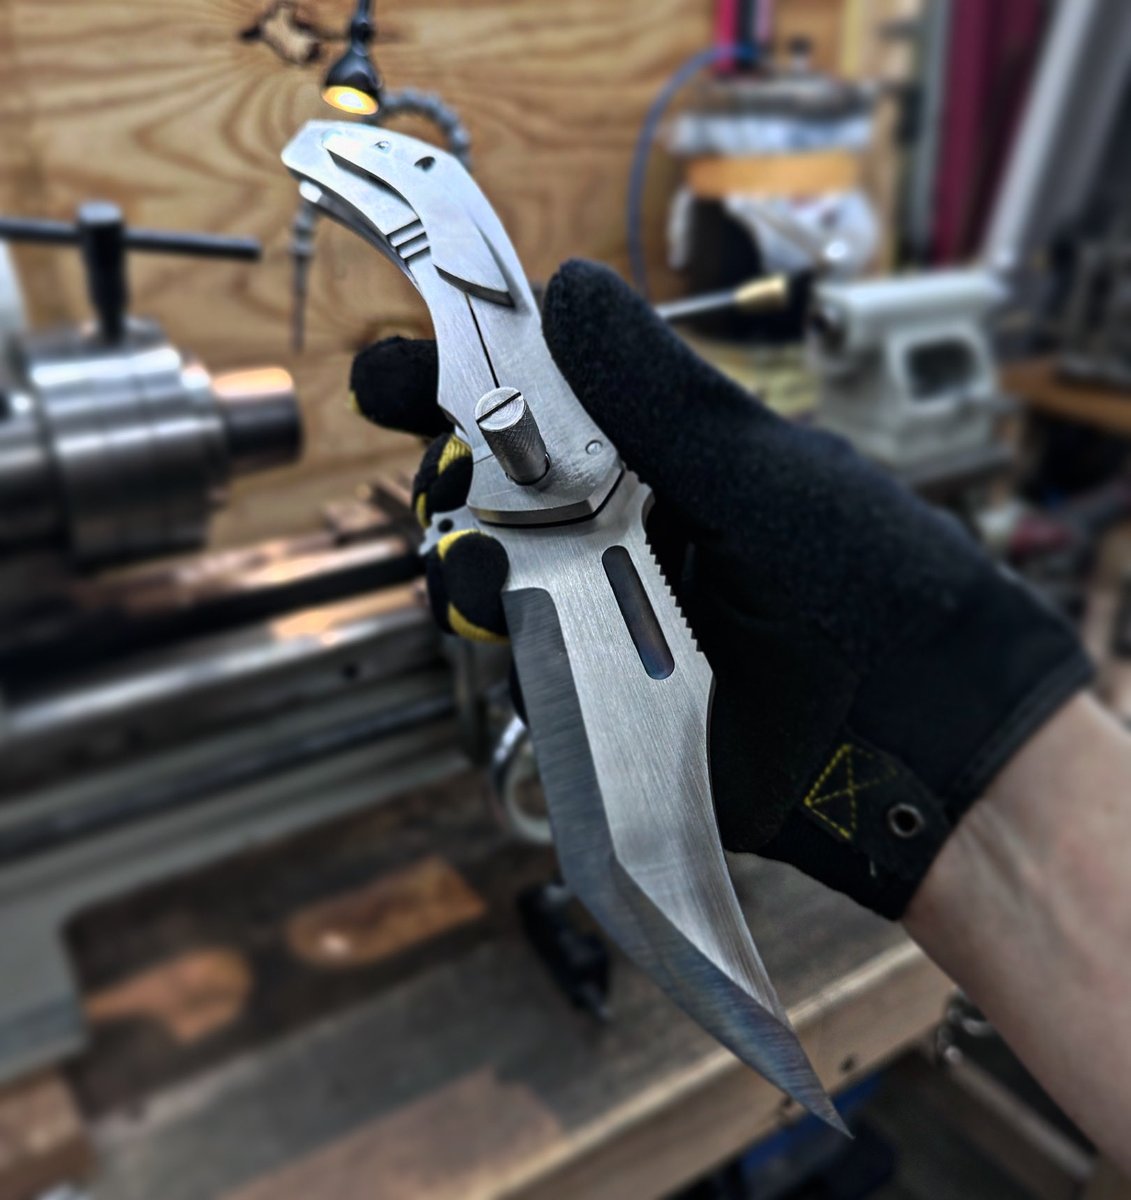 Working on new model. 4.55in blade. Anyone wants prototype #2? #workinprogress #handmade #rogovets